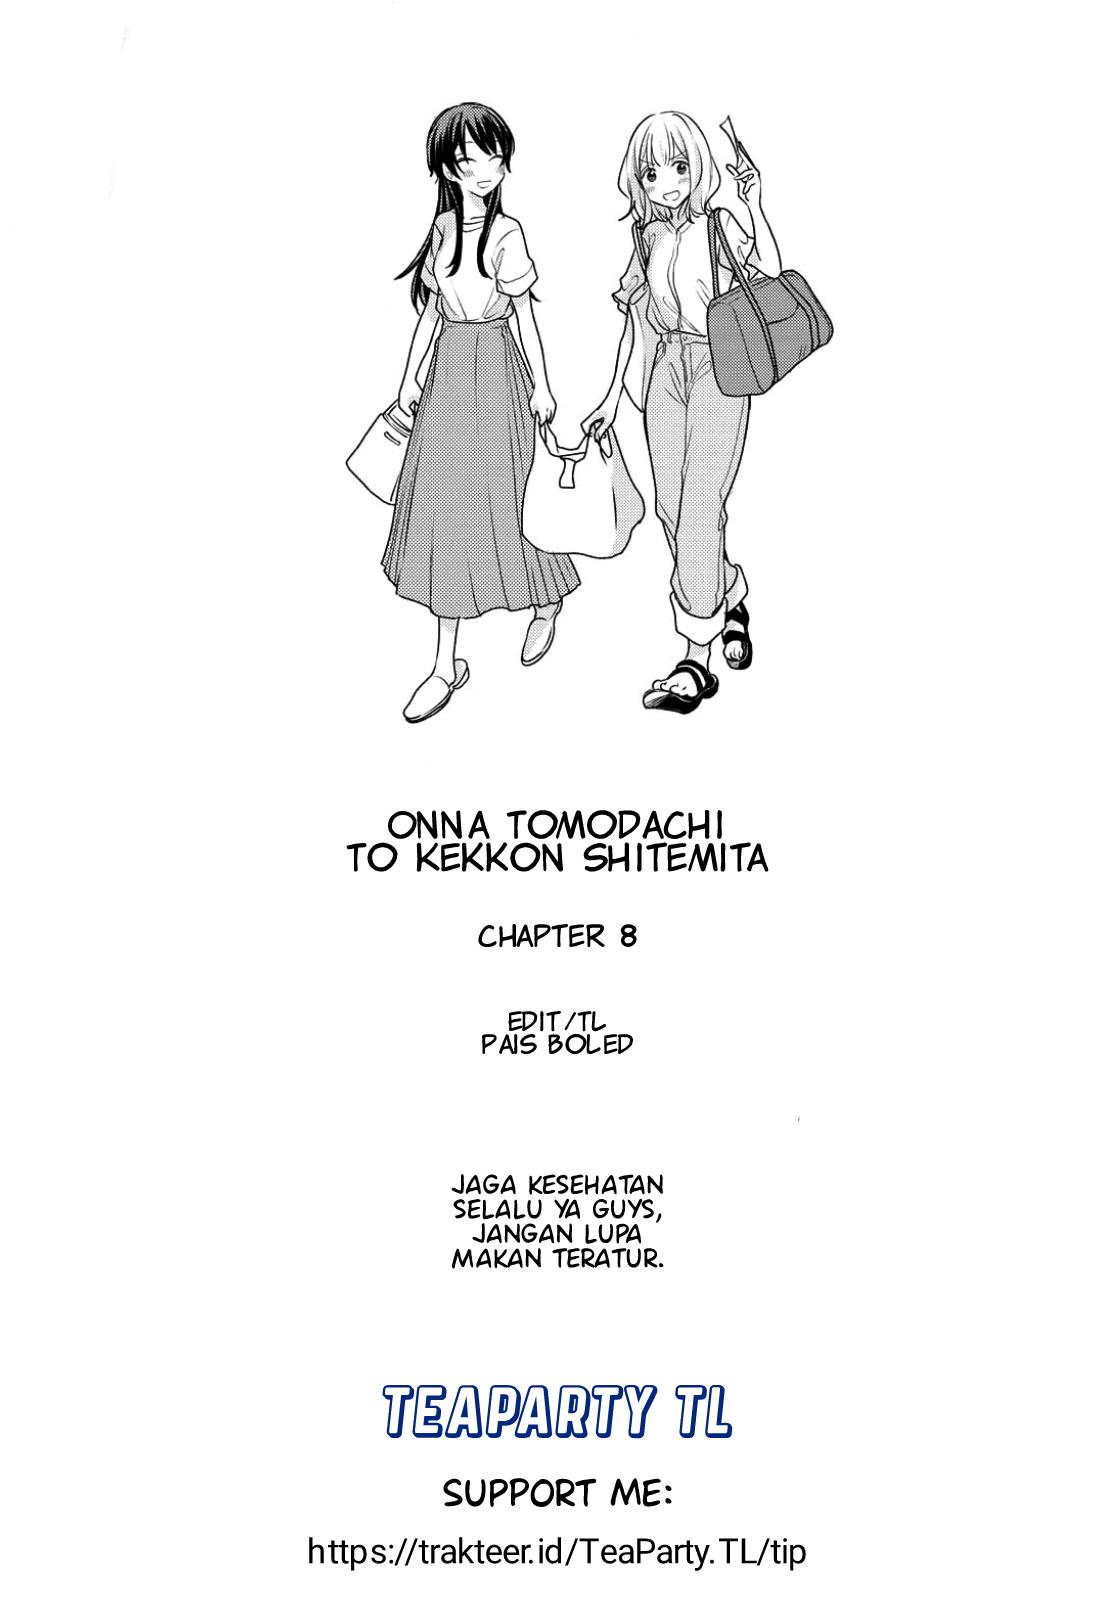 Onna Tomodachi to Kekkon Shitemita Chapter 8